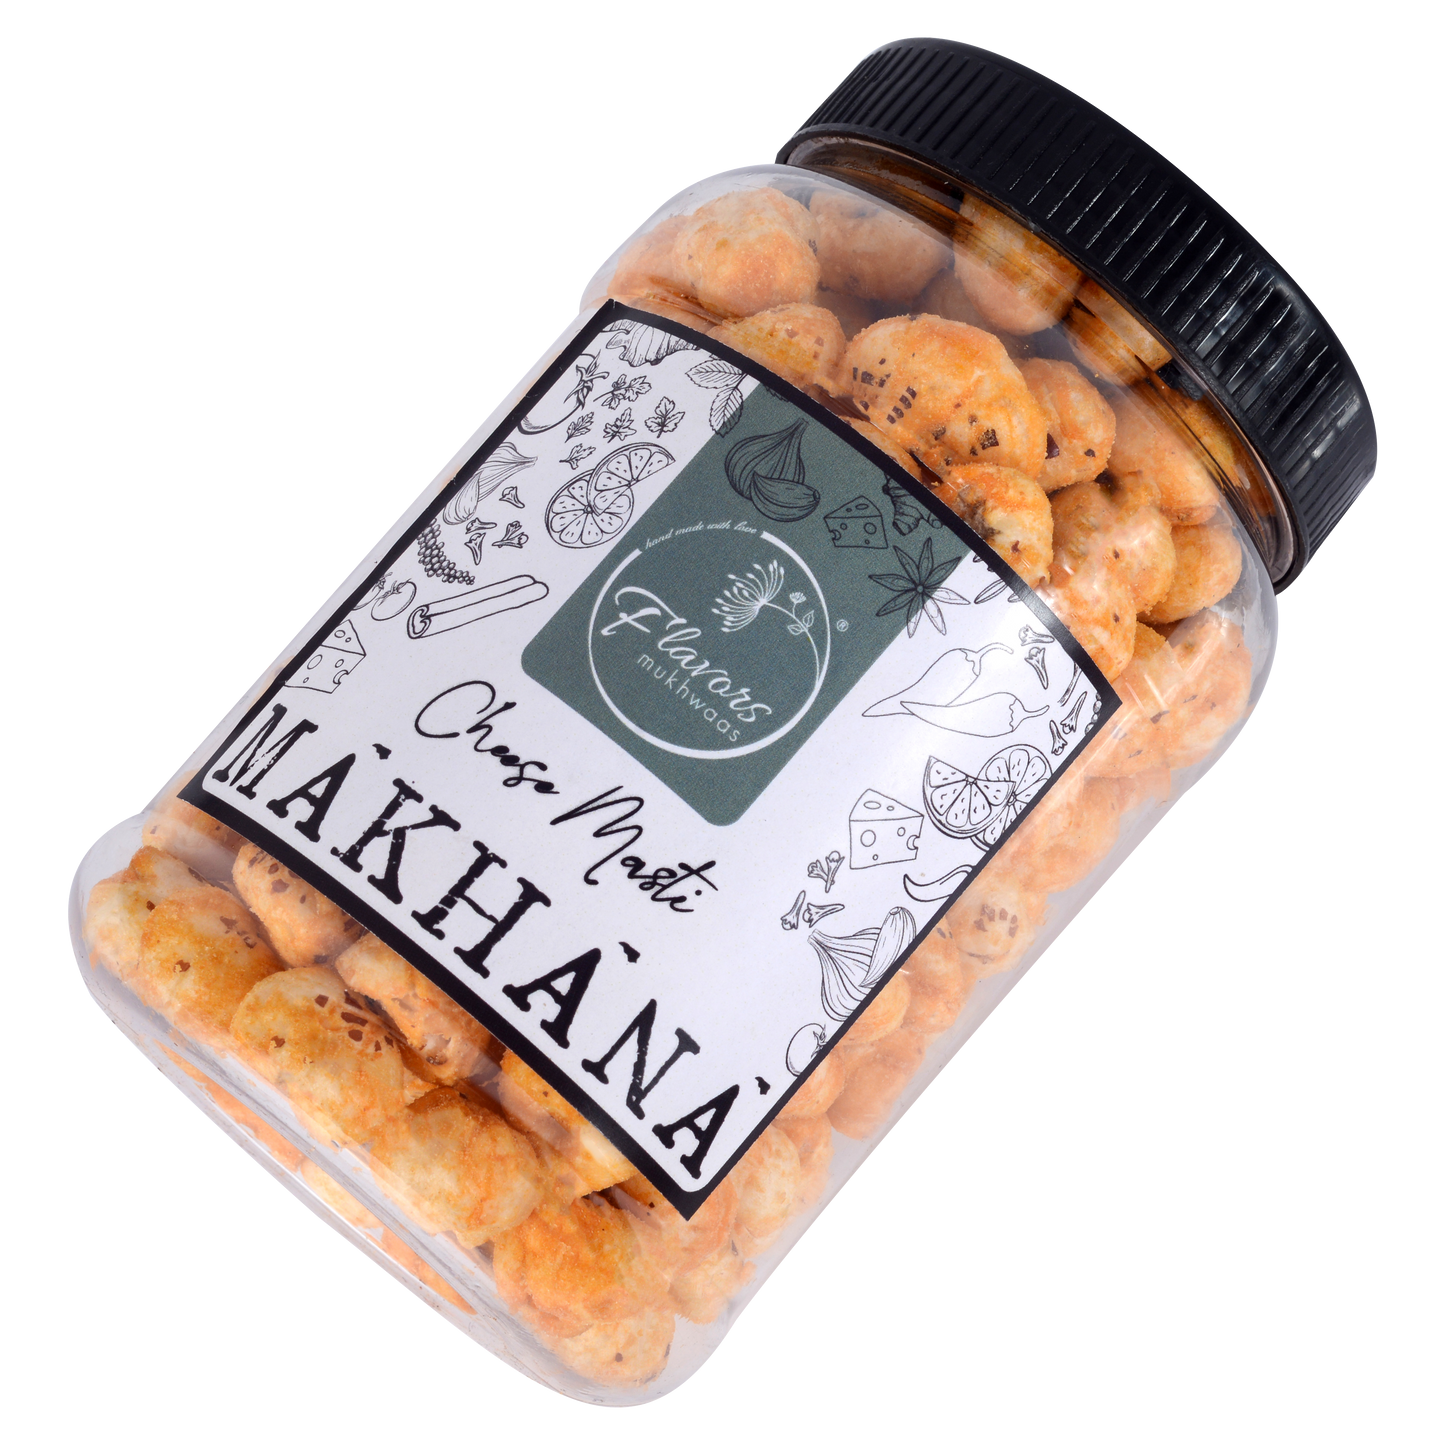 Cheese Masti Makhana (Fox Nuts) flavors mukhwaas